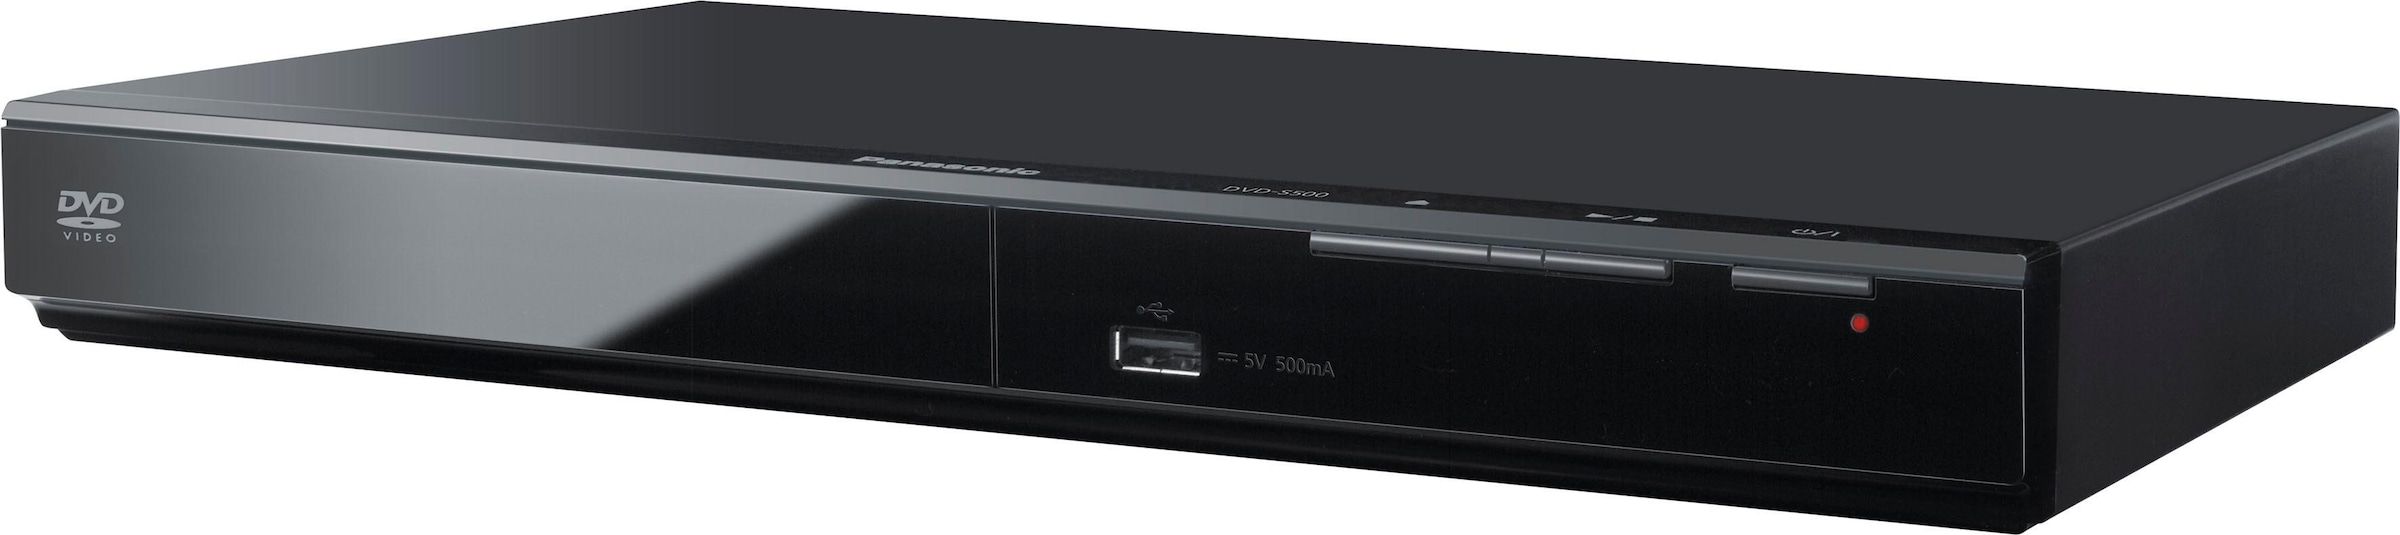 Panasonic DVD-Player »DVD-S500EG-K«